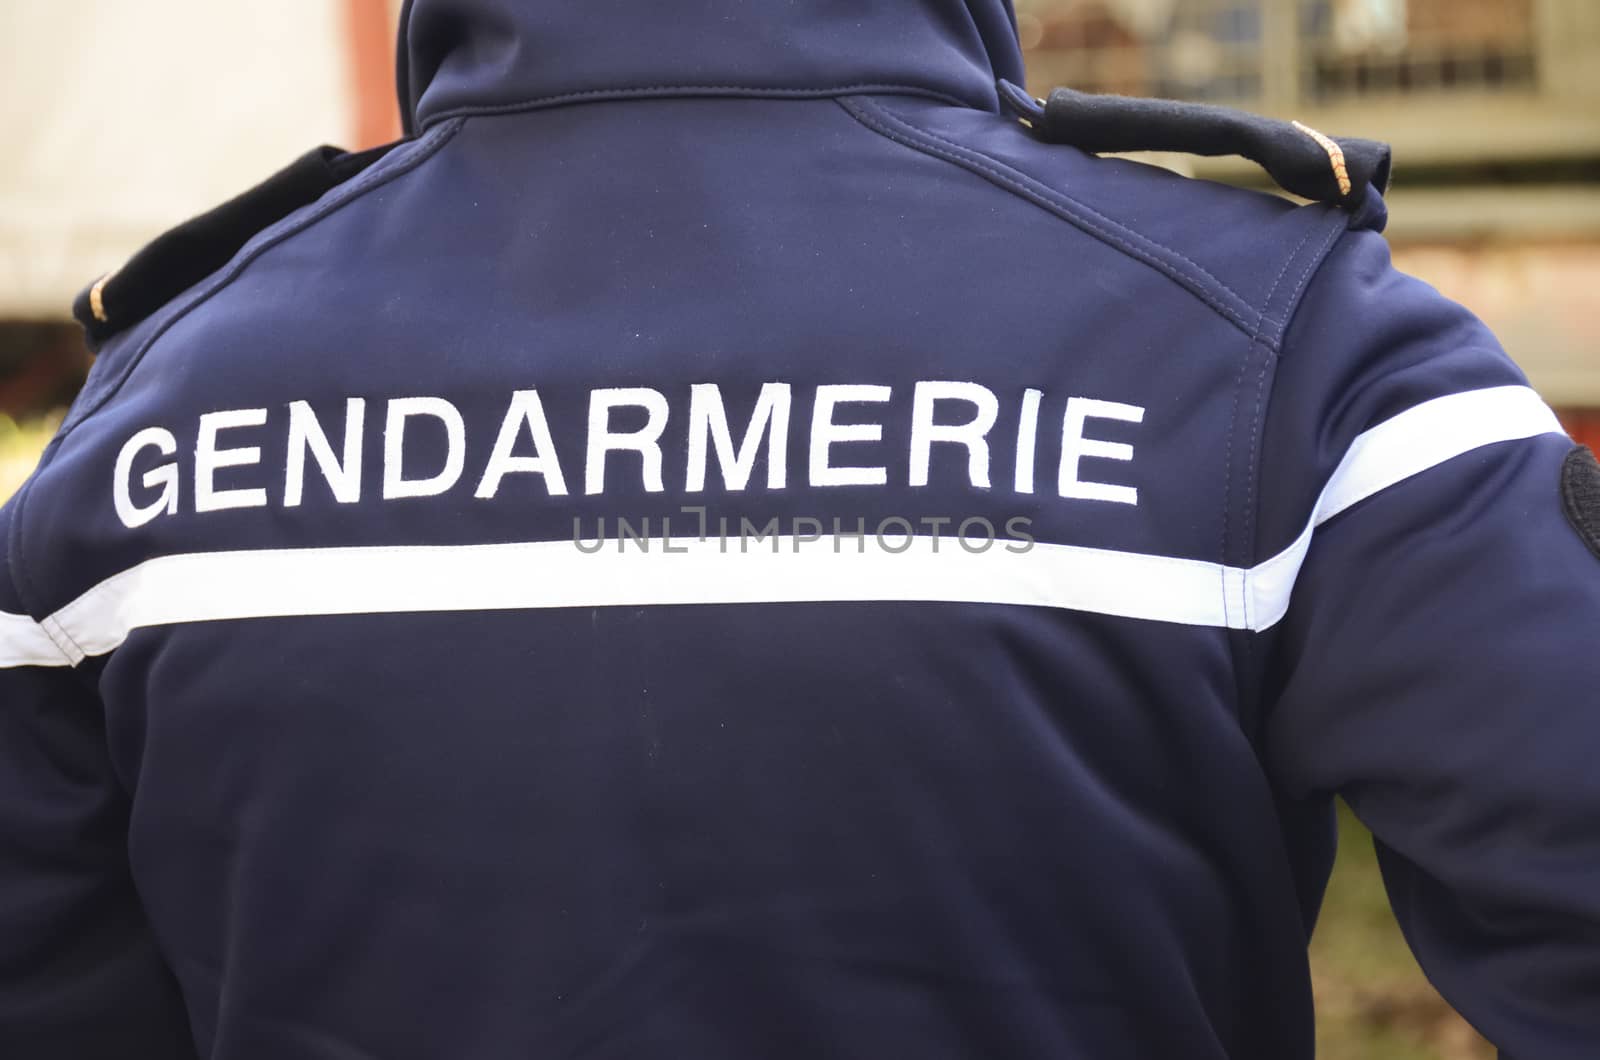 gendarme, french policeman by Joeblack